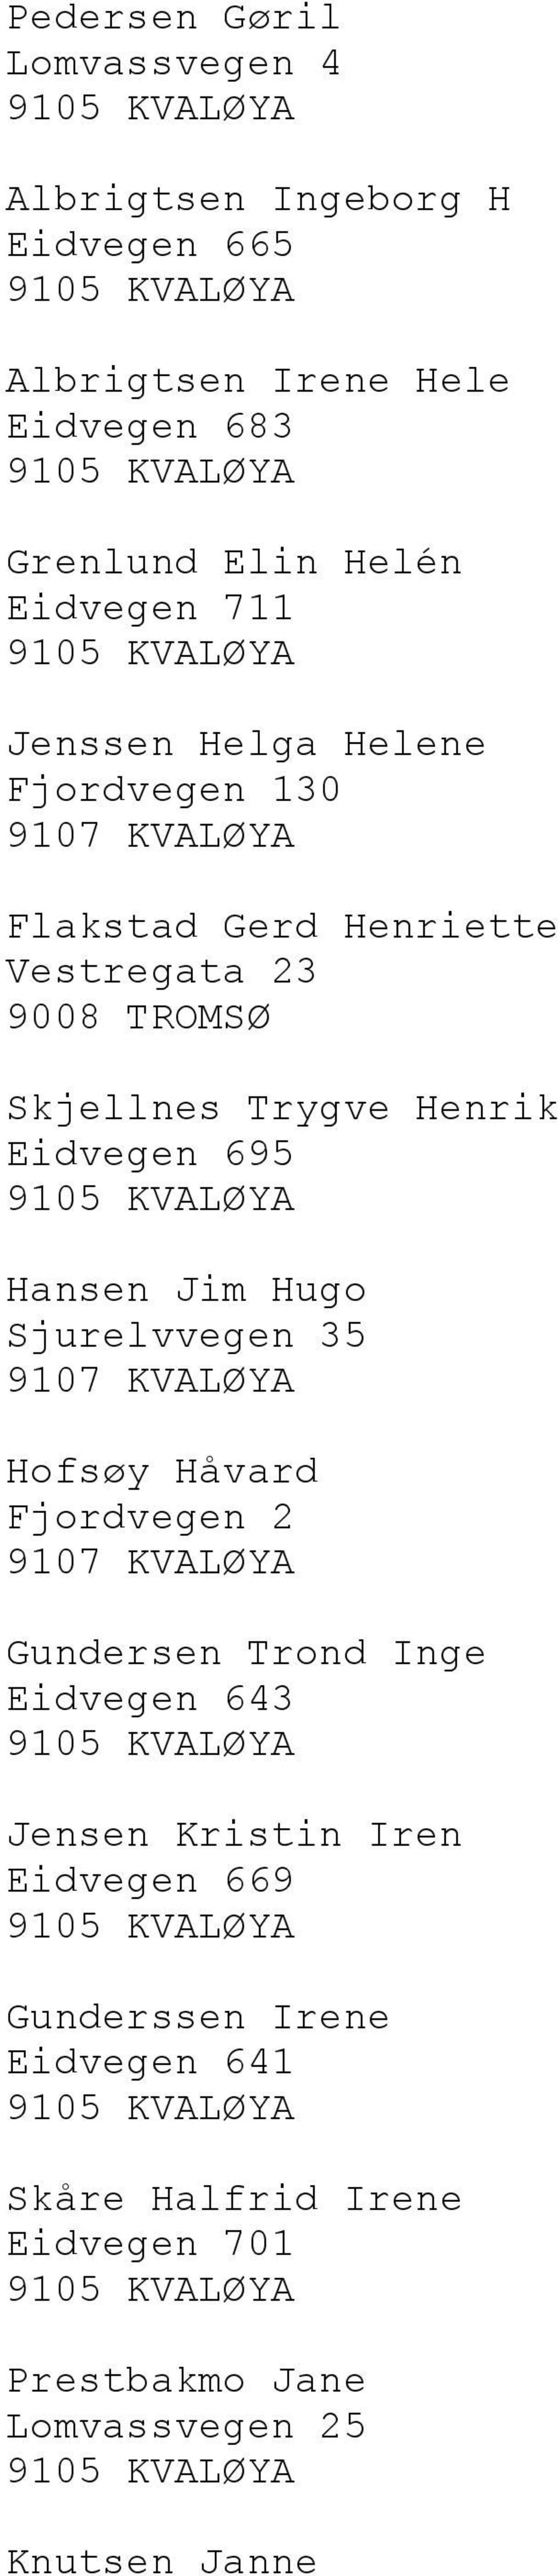 Eidvegen 695 Hansen Jim Hugo Sjurelvvegen 35 Hofsøy Håvard Fjordvegen 2 Gundersen Trond Inge Eidvegen 643 Jensen Kristin